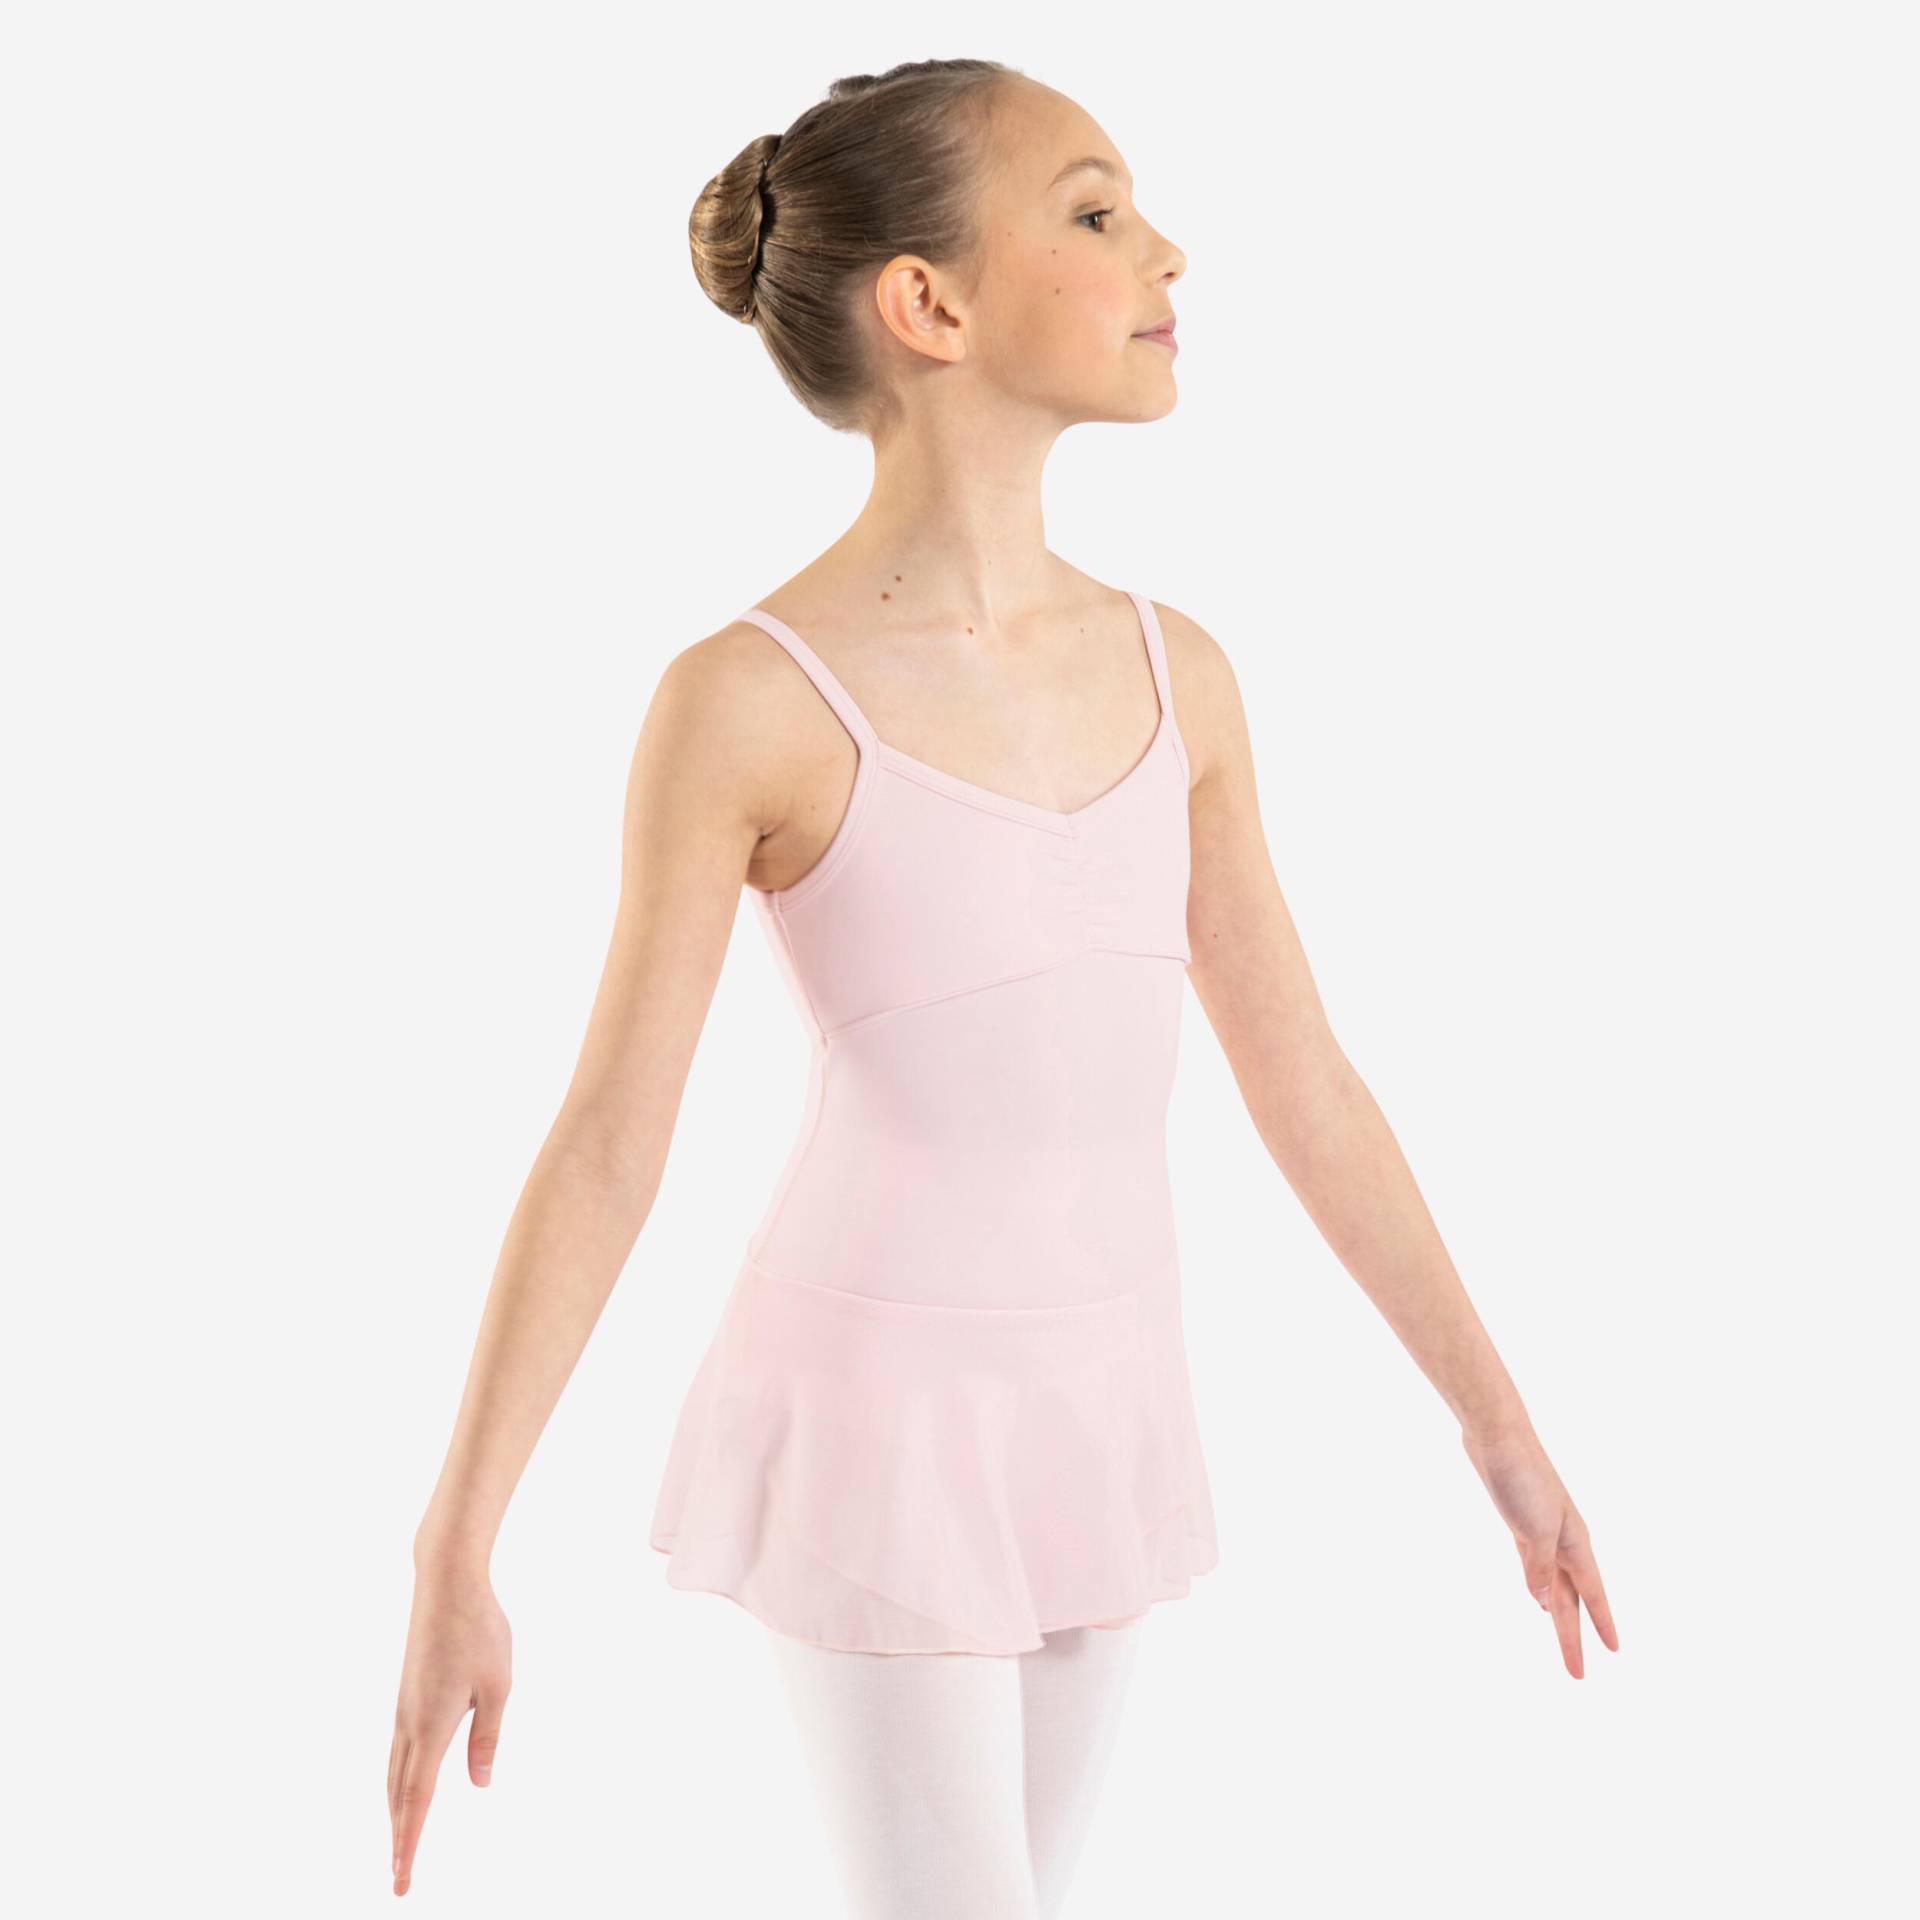 Ballett-Trikot Mädchen - hellrosa von STAREVER